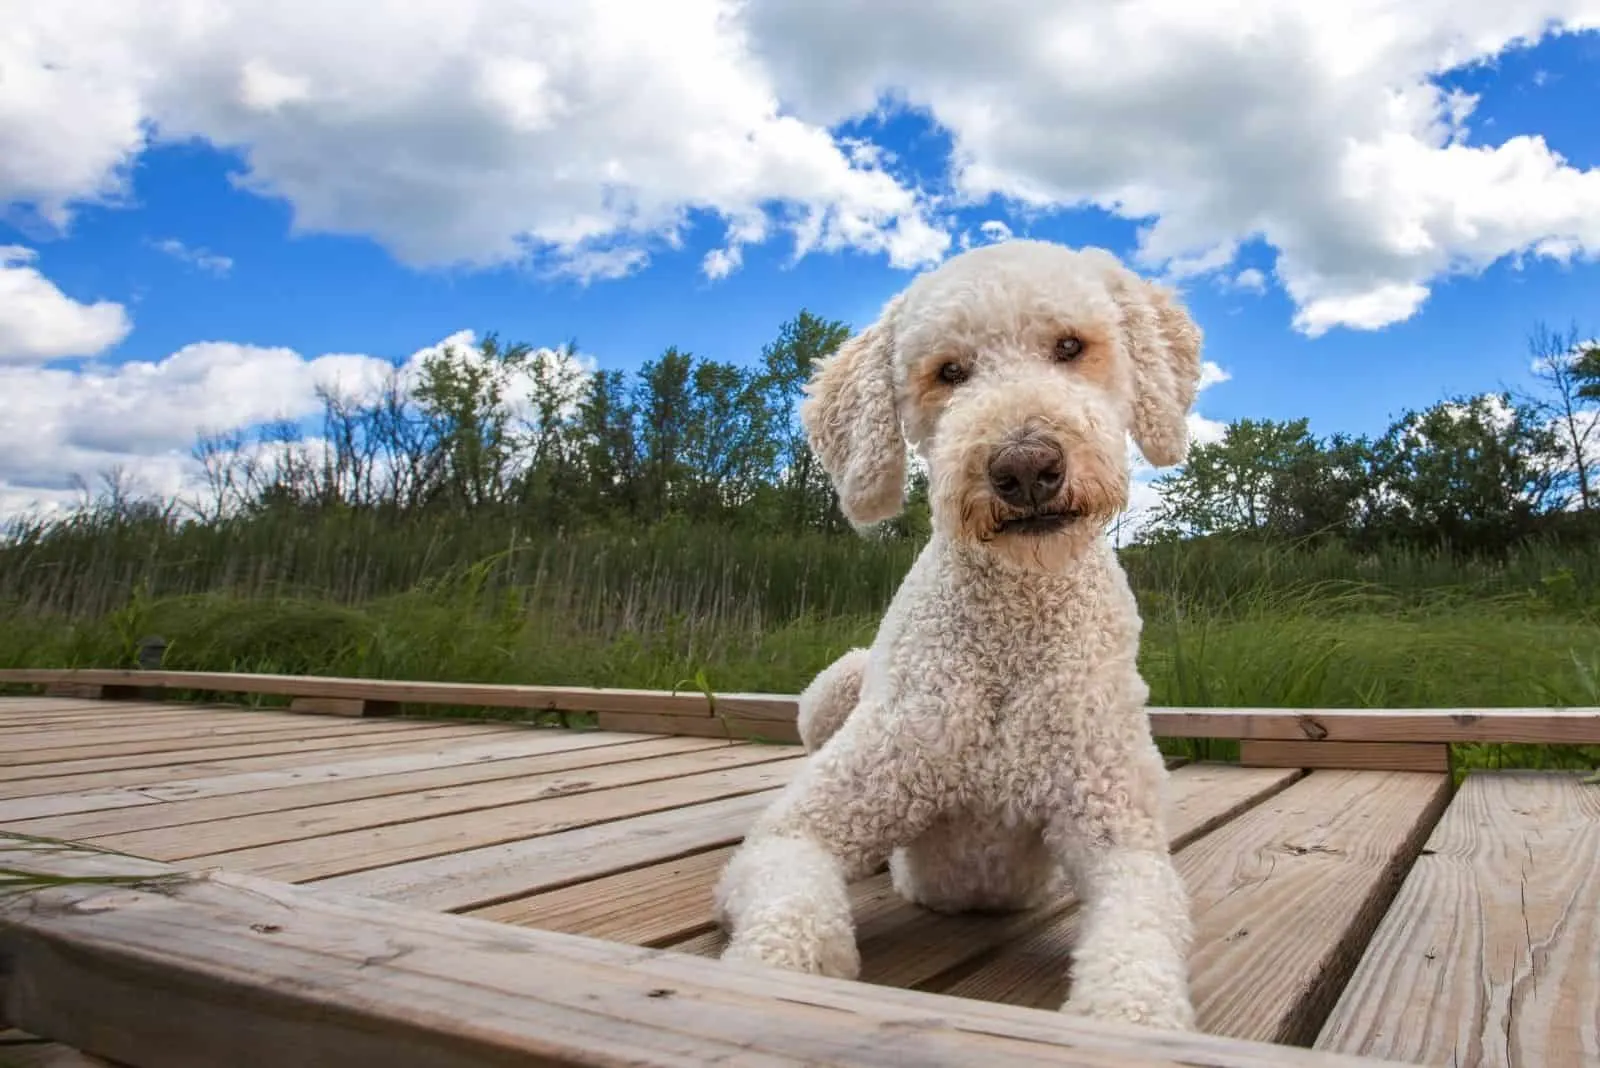 beautiful goldendoodle dog sitting on wooden platform under the blue skies